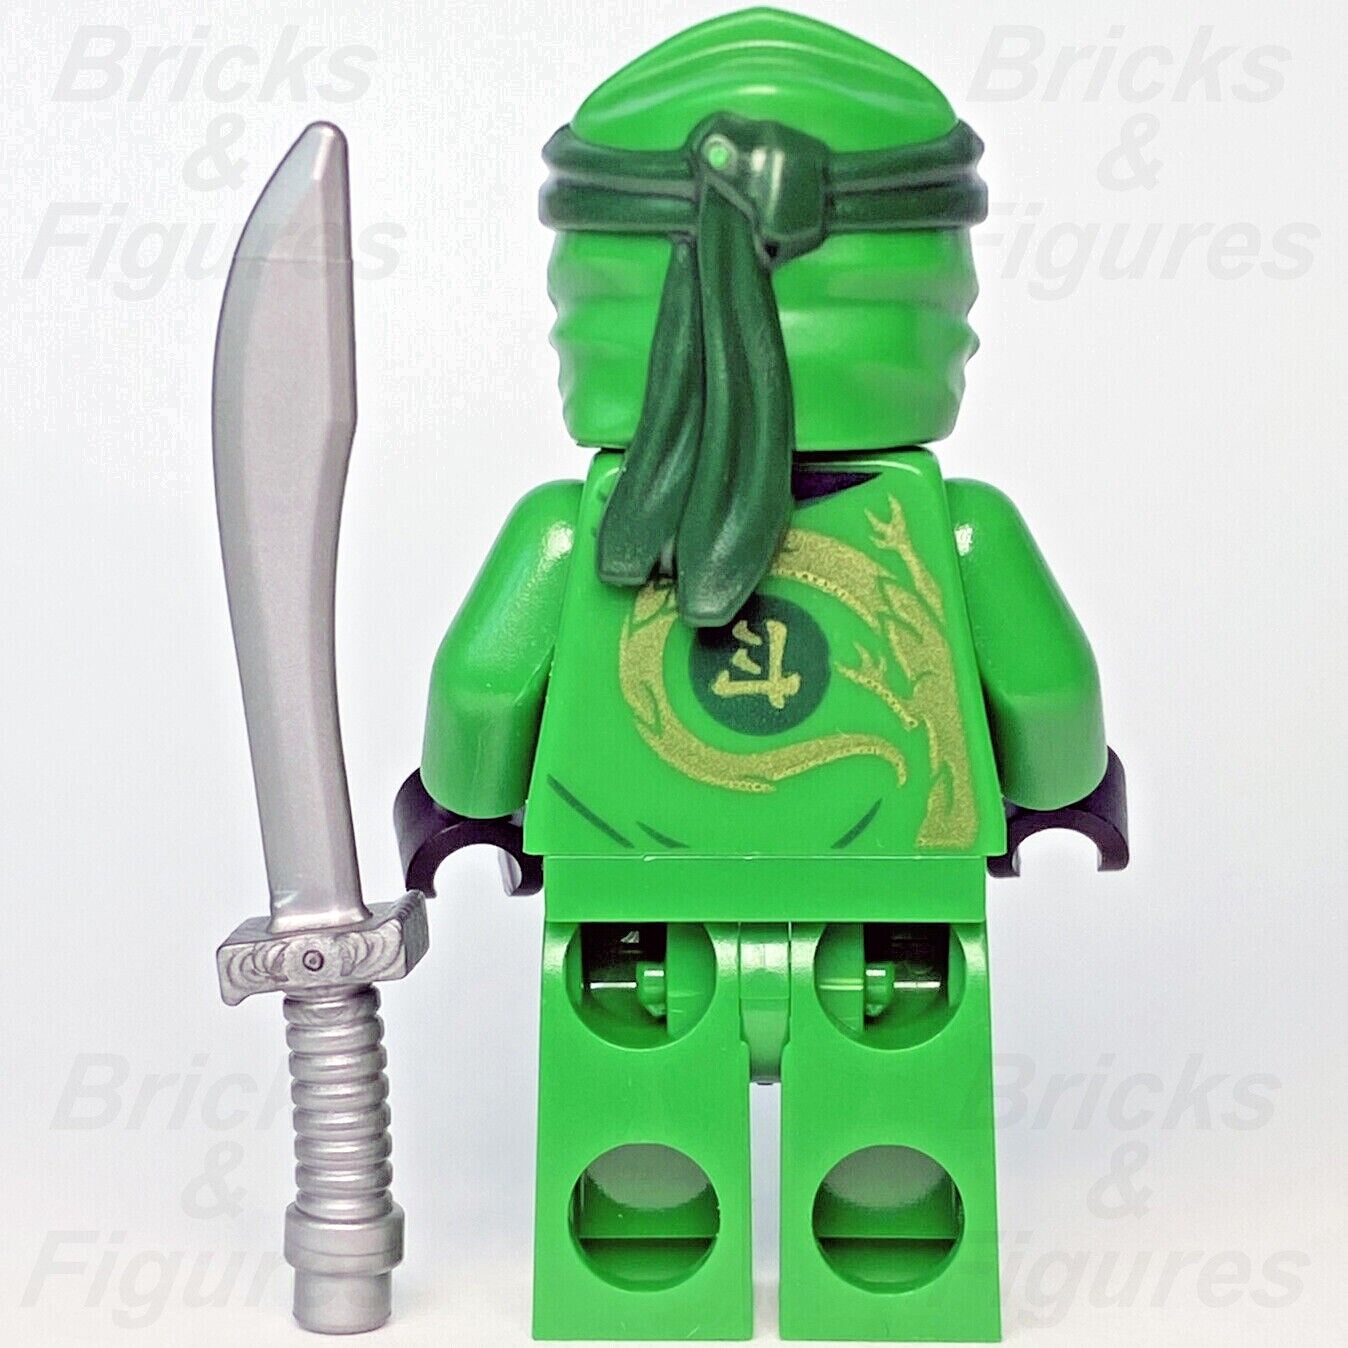 Ninjago LEGO Lloyd Legacy Possession Green Ninja Minifigure 112111 njo708  New